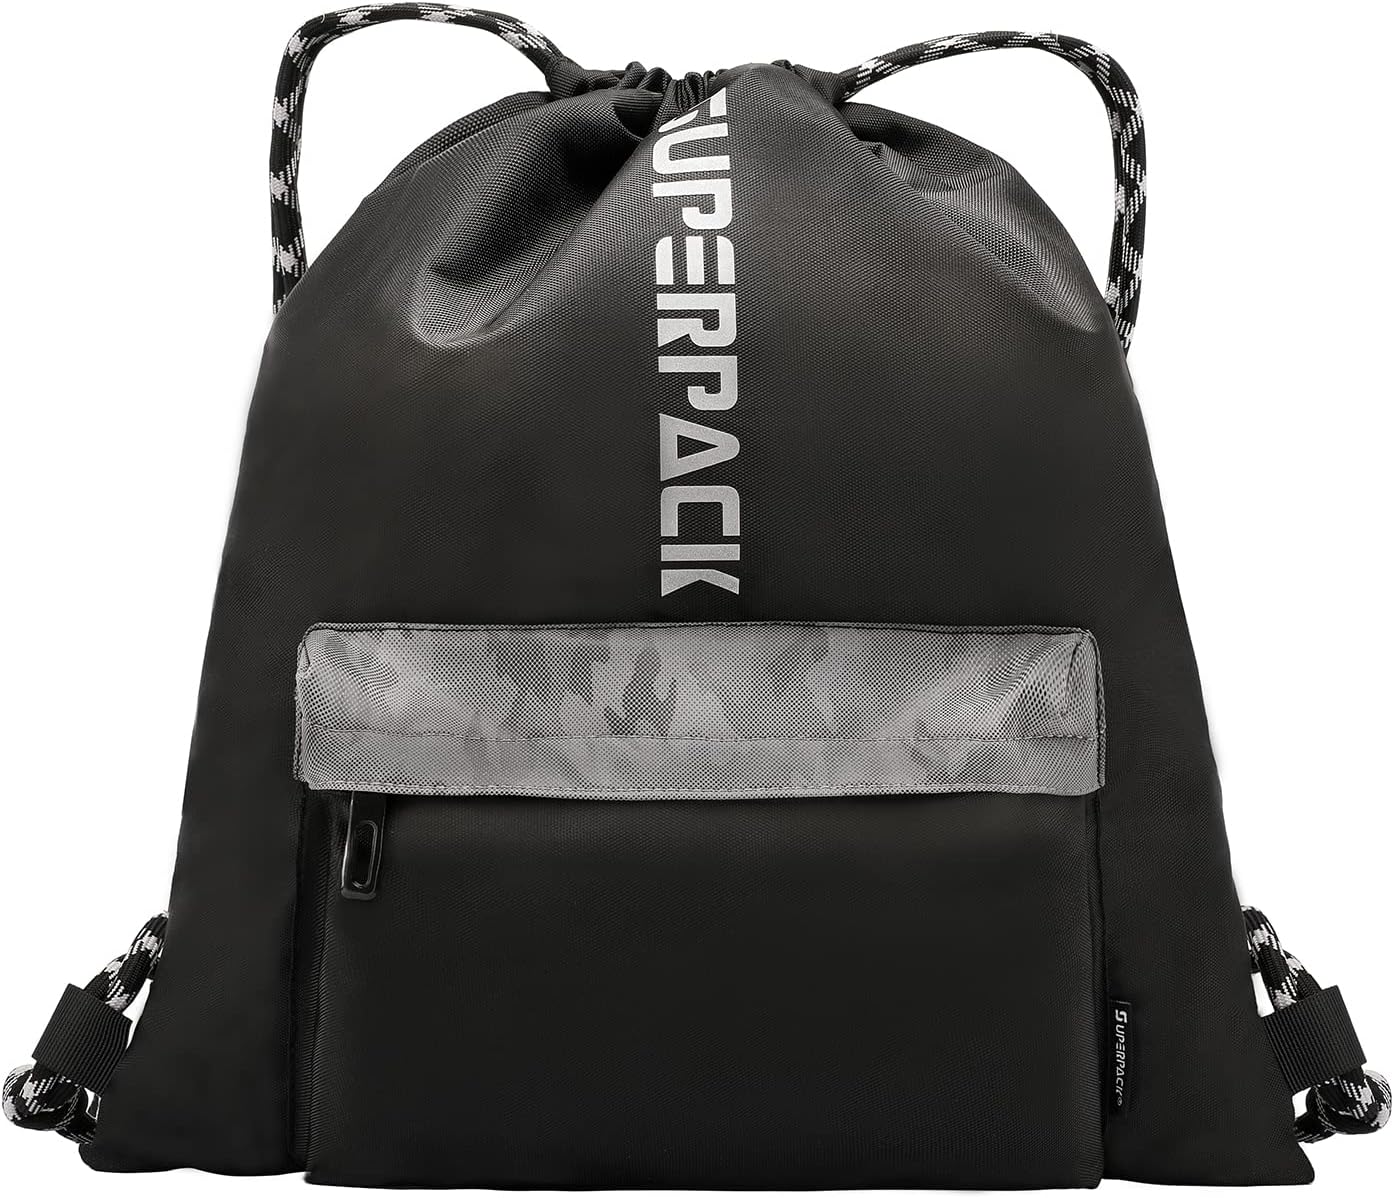 Aiditex Drawstring Bags Backpack for Men Black Sport Gym Sack Bag 